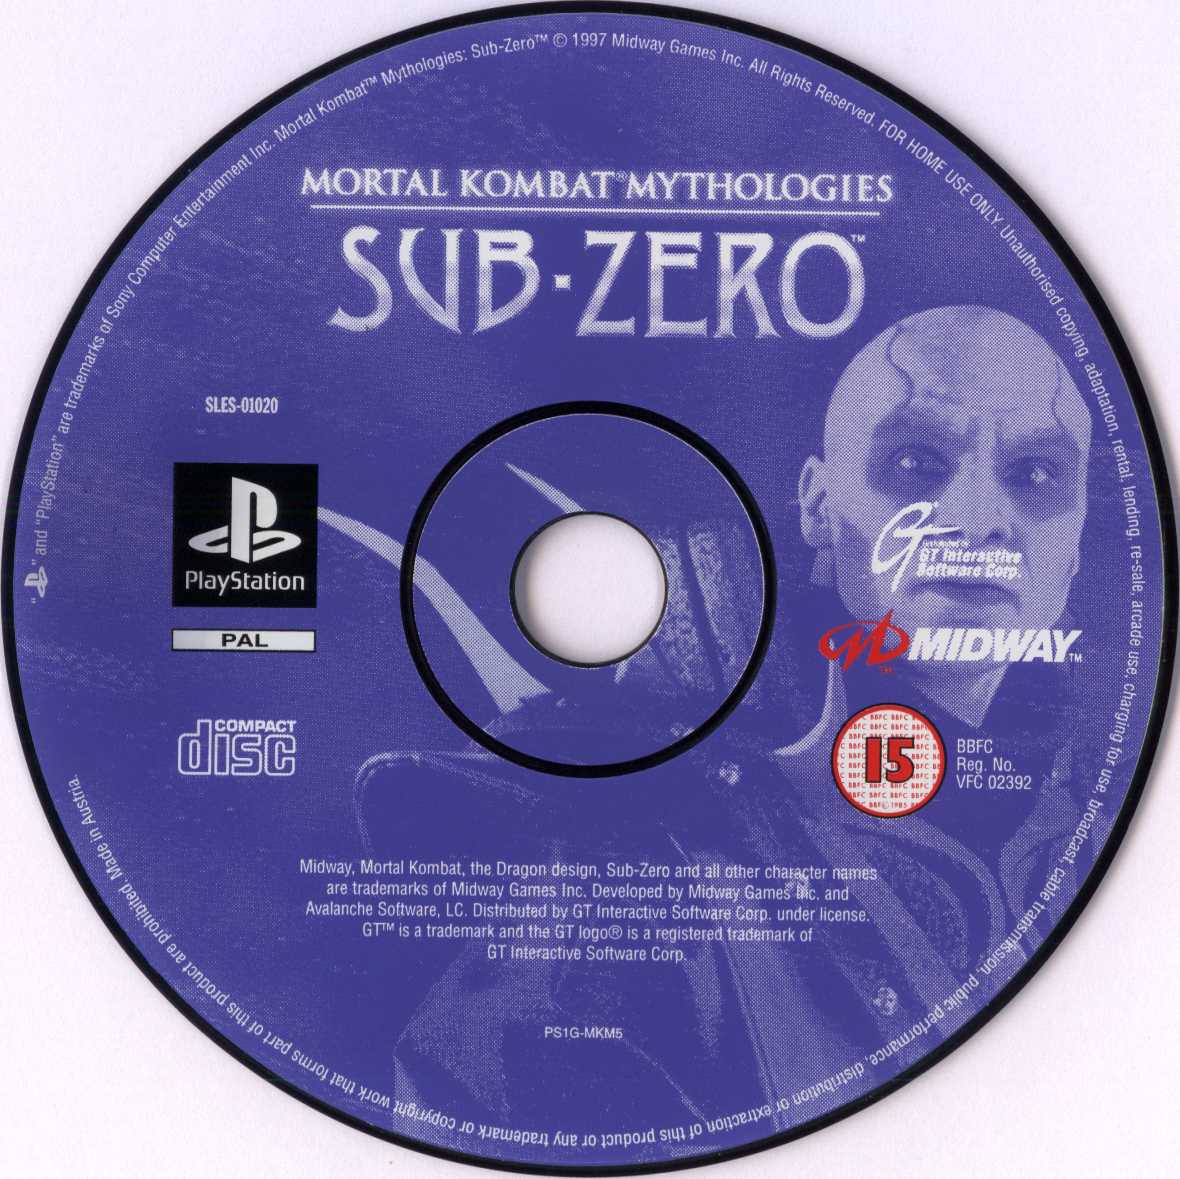 Mortal Kombat Mythologies - Sub-Zero PSX cover.